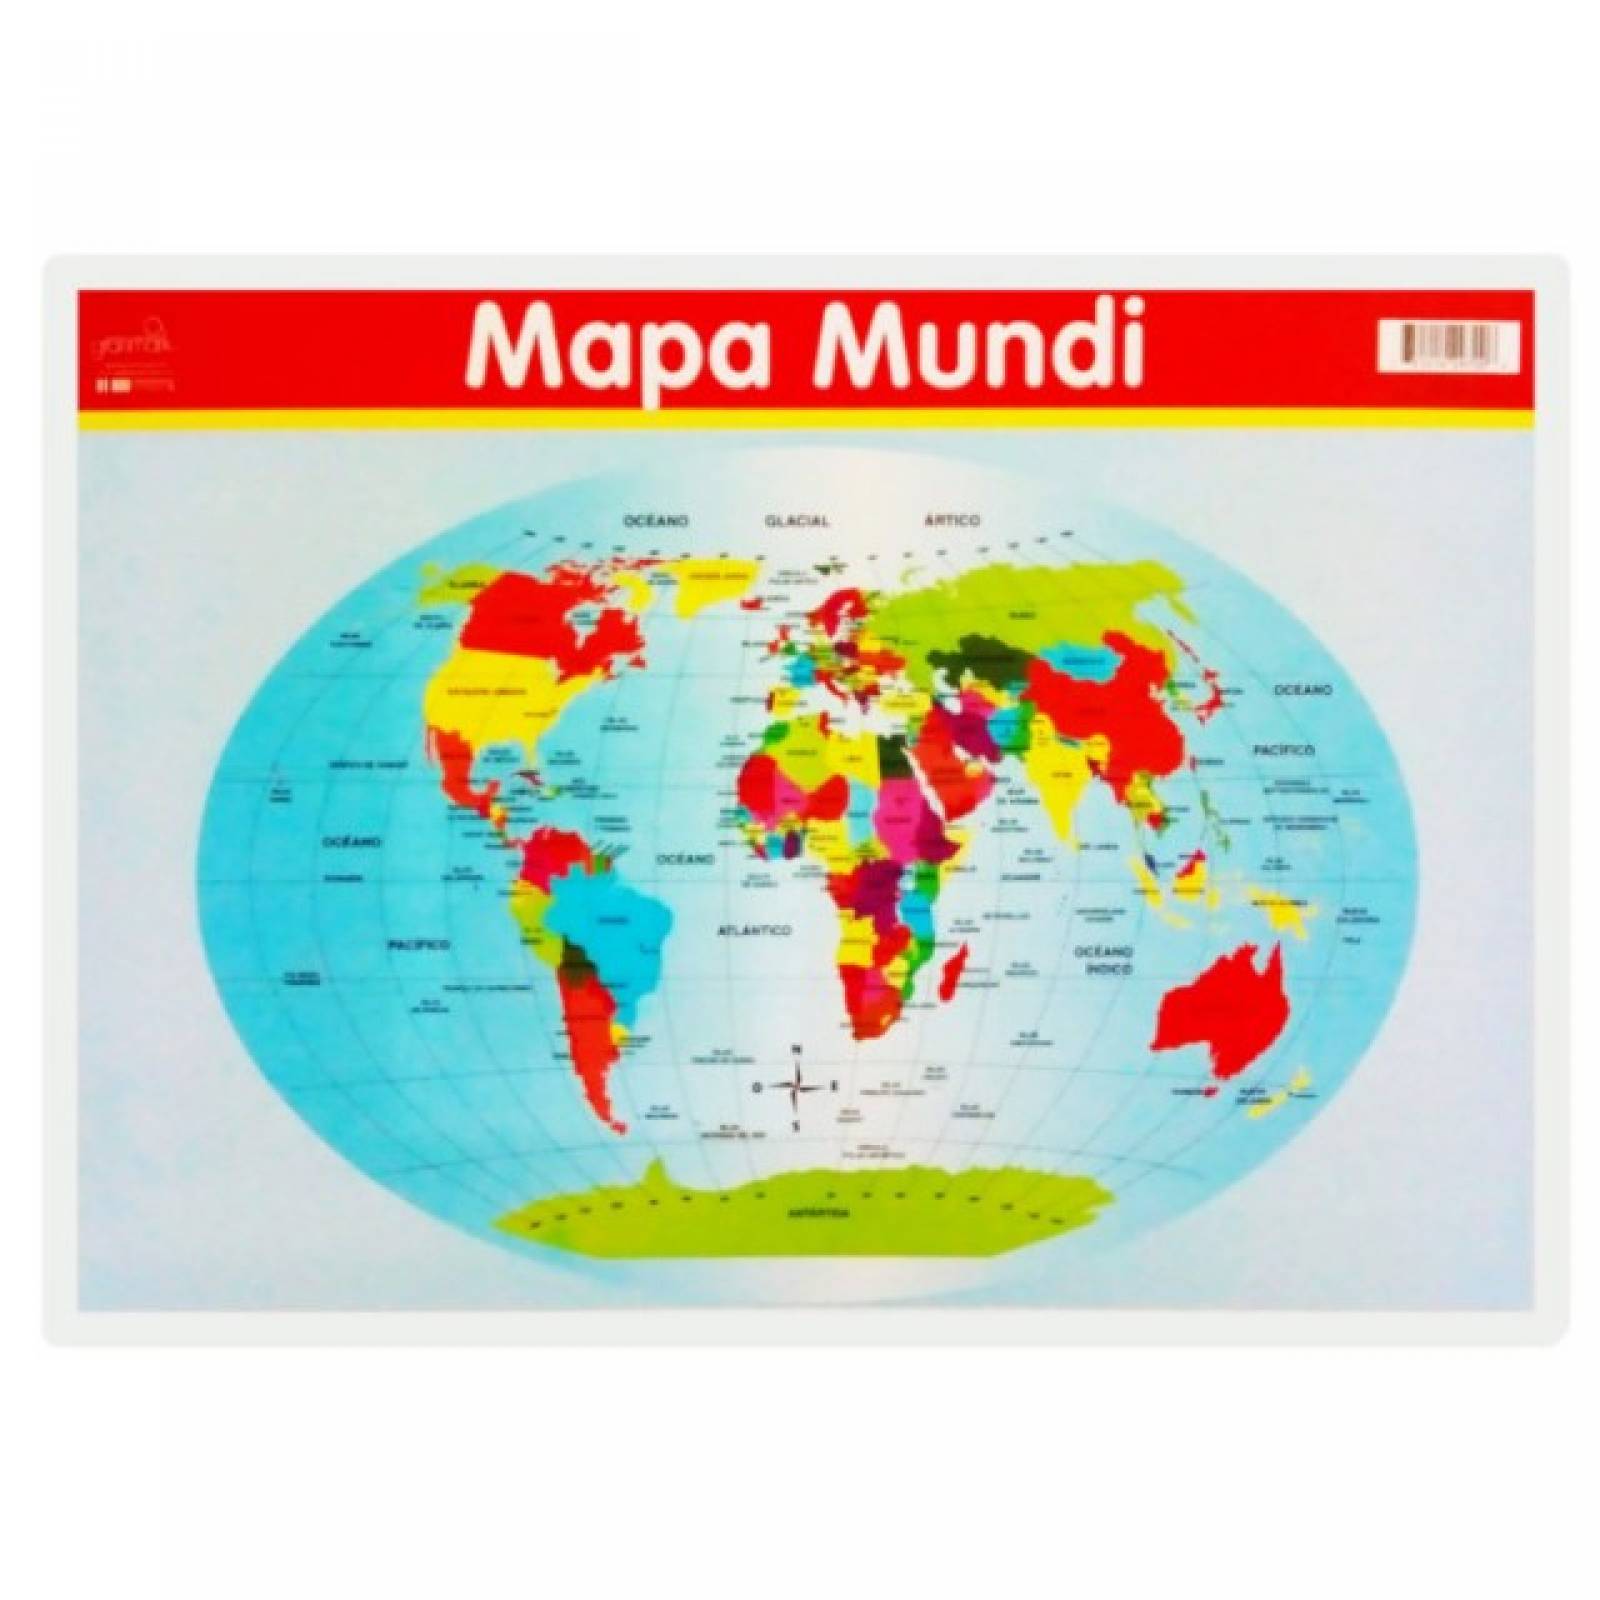 PÃ³ster didÃ¡ctico Chico: Mapa Mundi (35 x 50 cm)